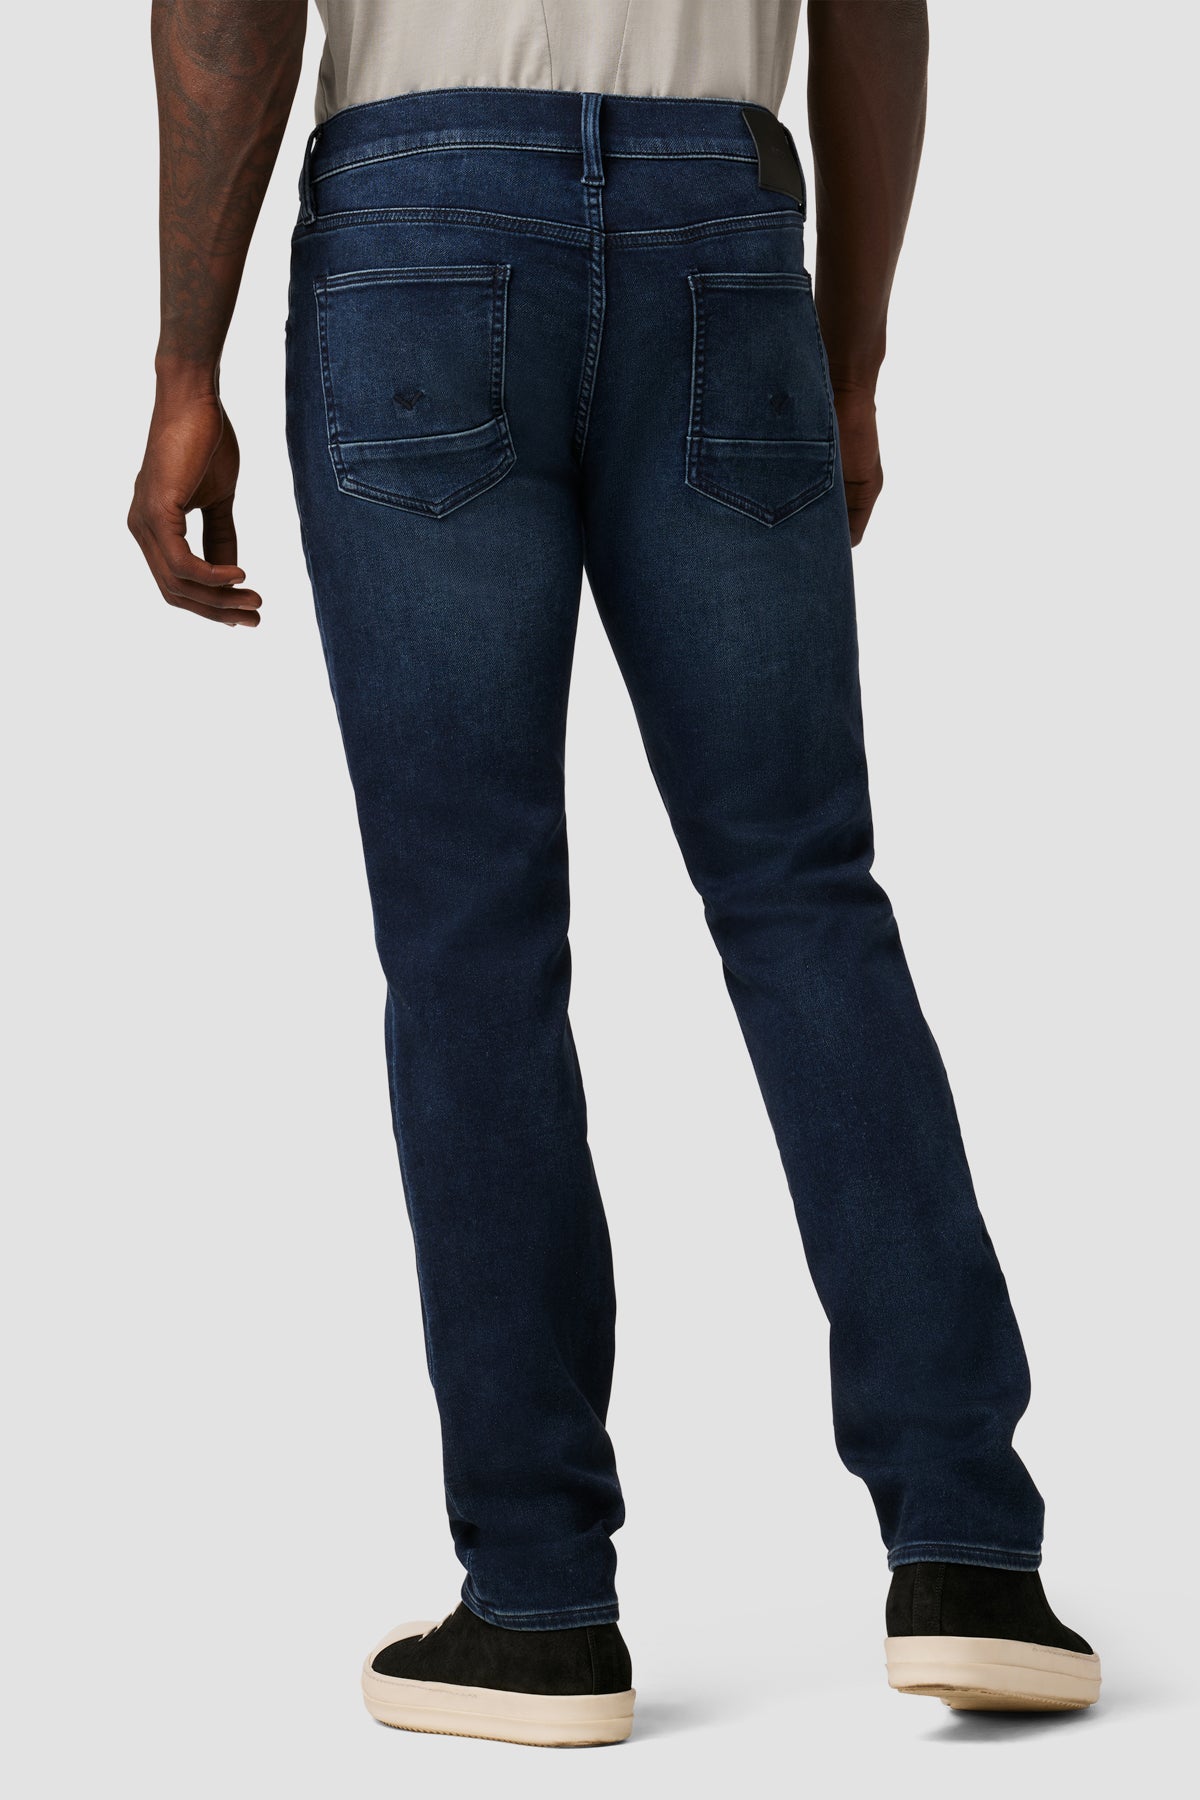 Mens straight jeans at Firetrap.com